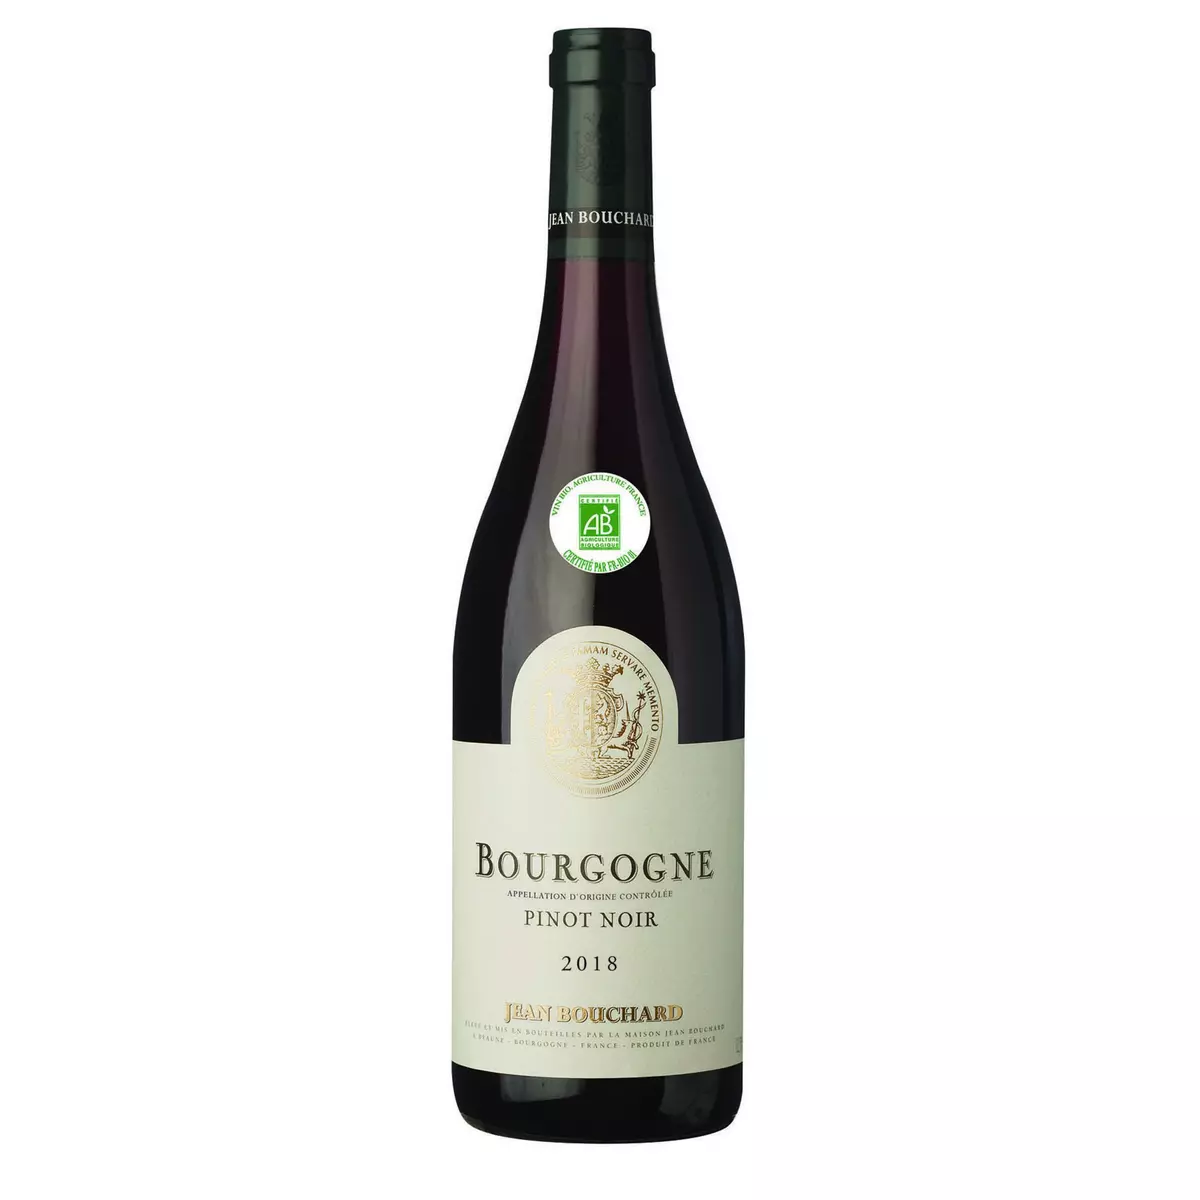 Vin rouge AOP Bourgogne pinot noir Jean Bouchard bio 2018 75cl